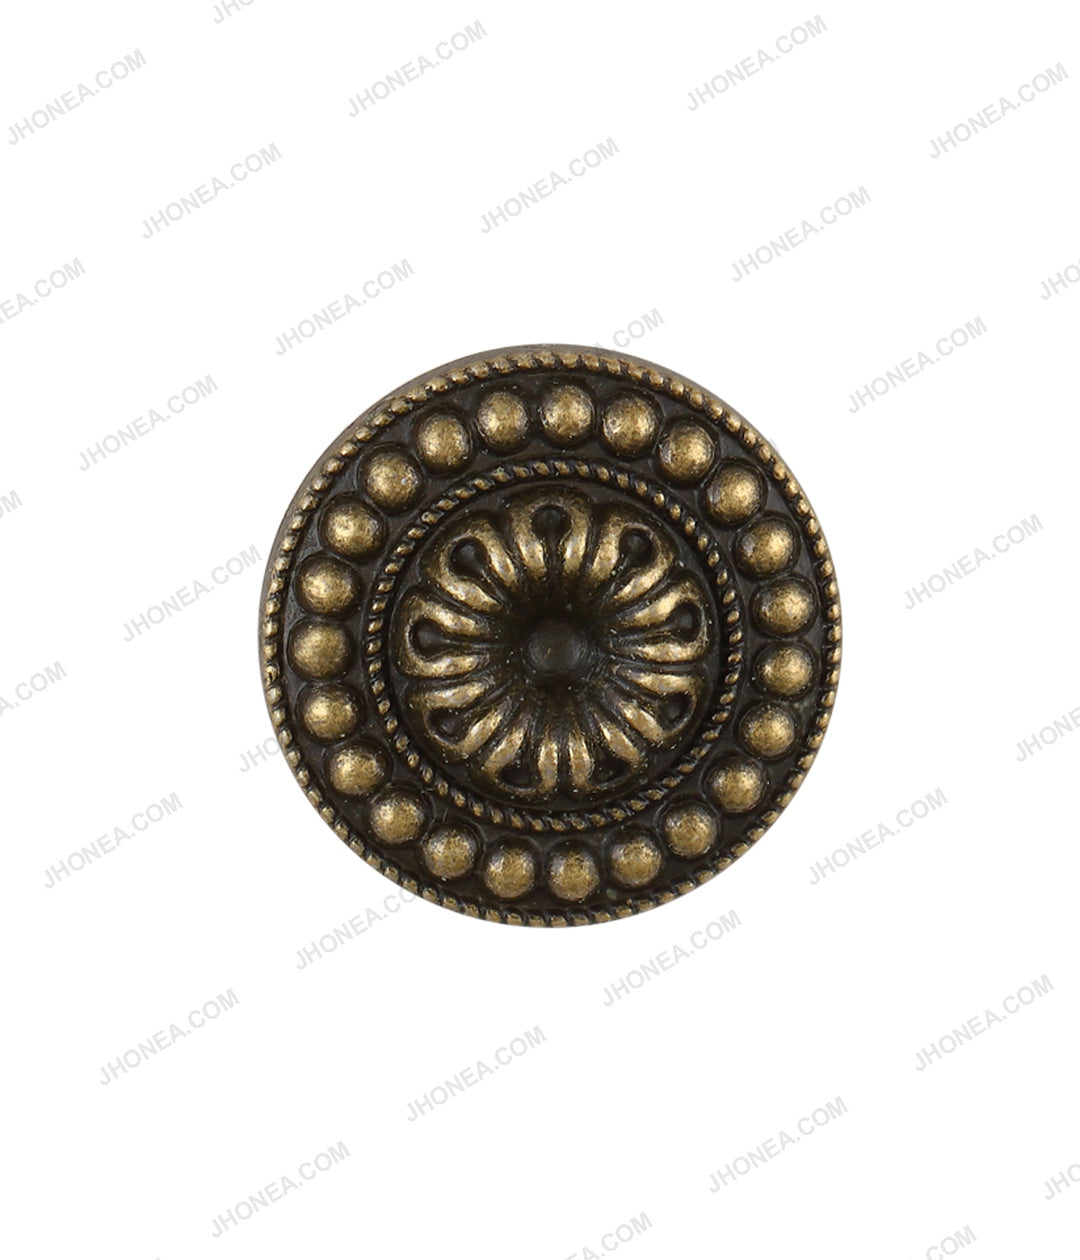 Antique Brass Vintage Design Ethnic Buttons